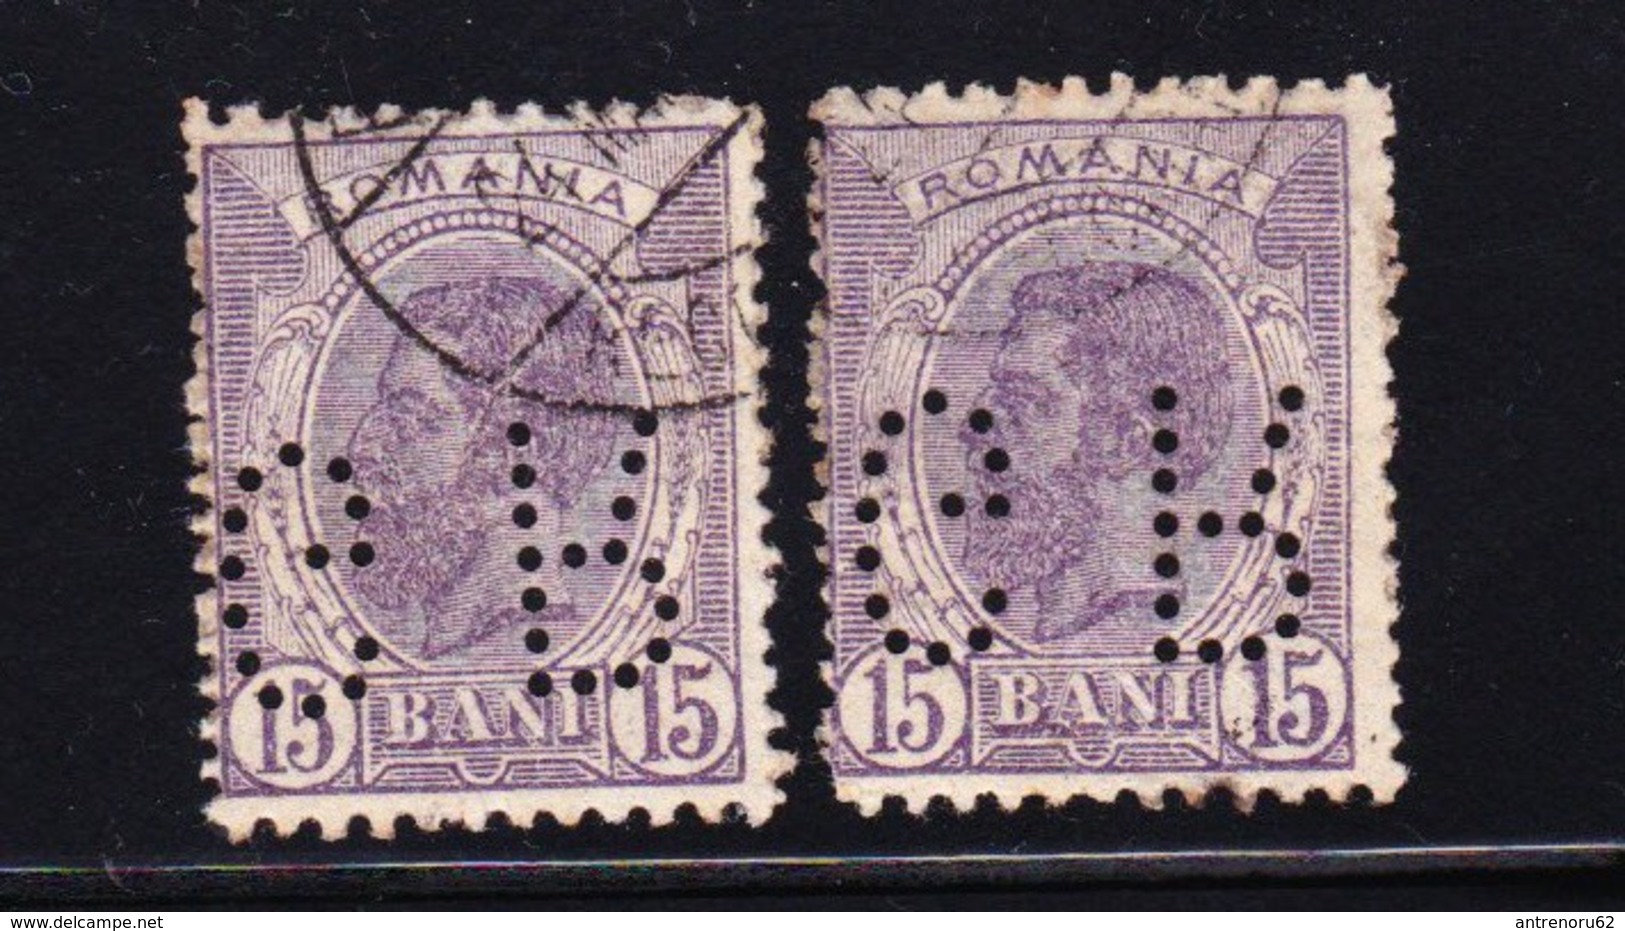 STAMPS-ROMANIA-PERFINS-USED-SEE-SCAN - 1858-1880 Moldavia & Principato